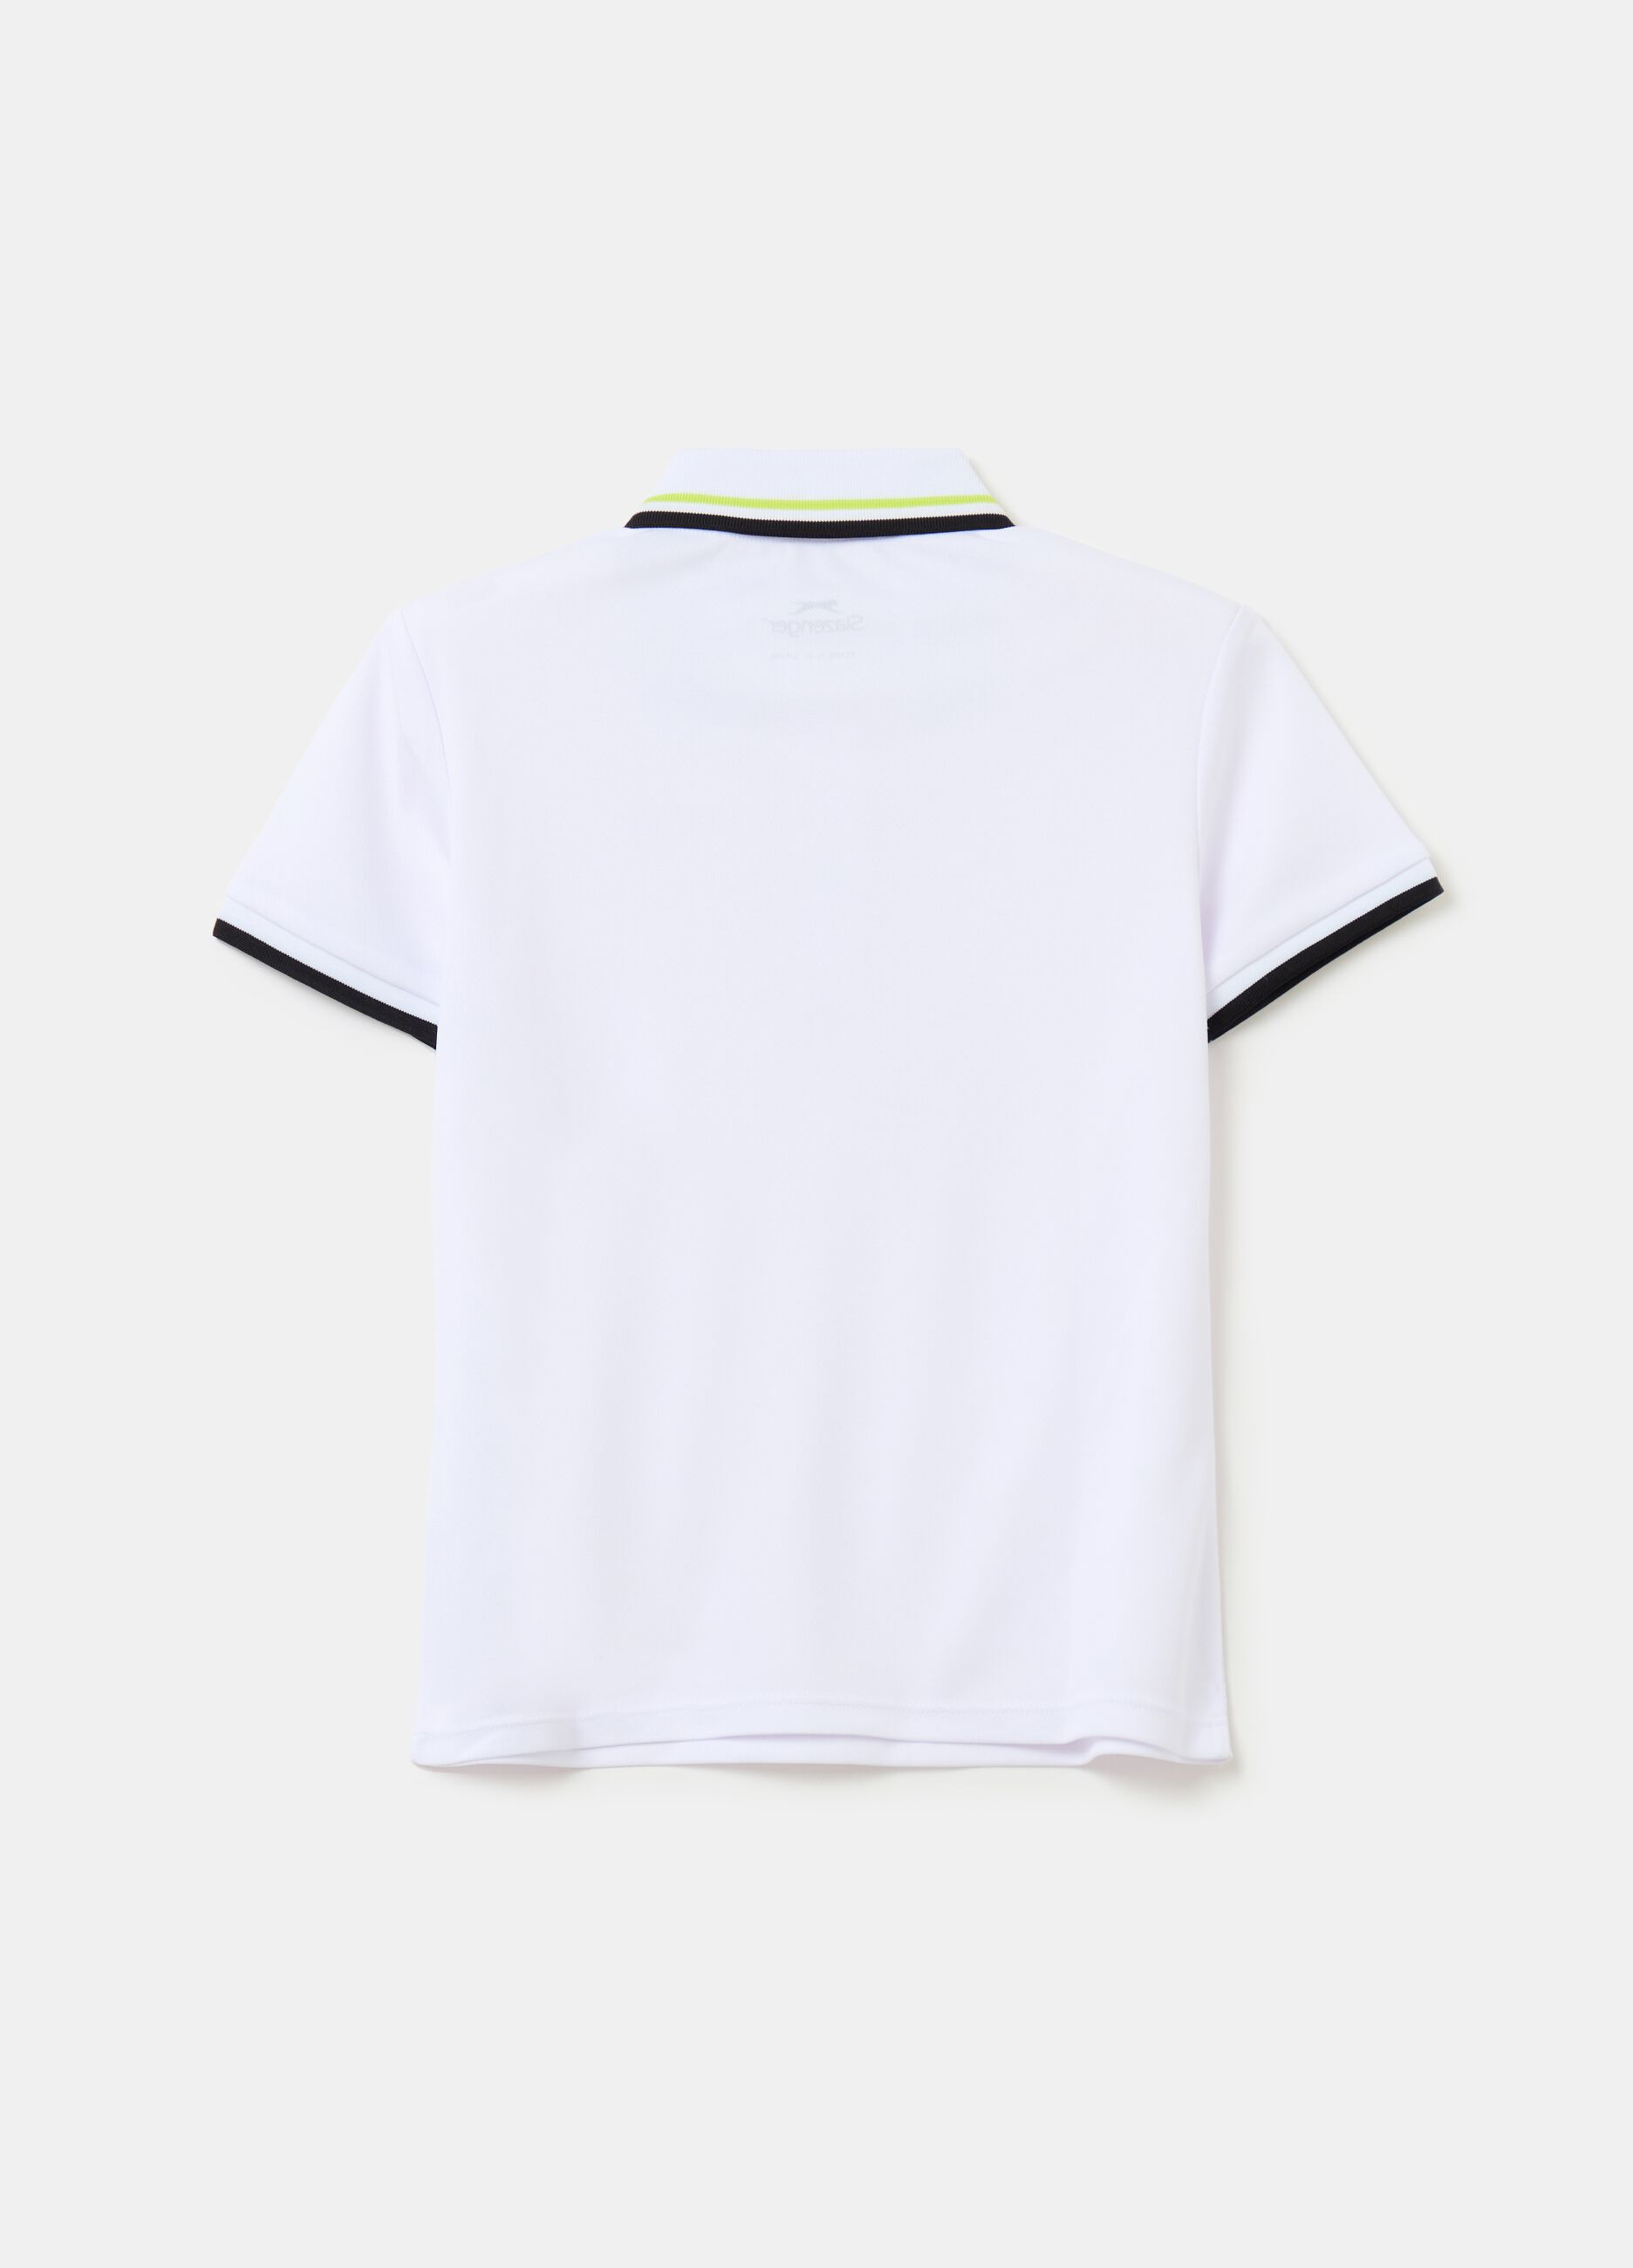 Slazenger quick-dry tennis polo shirt